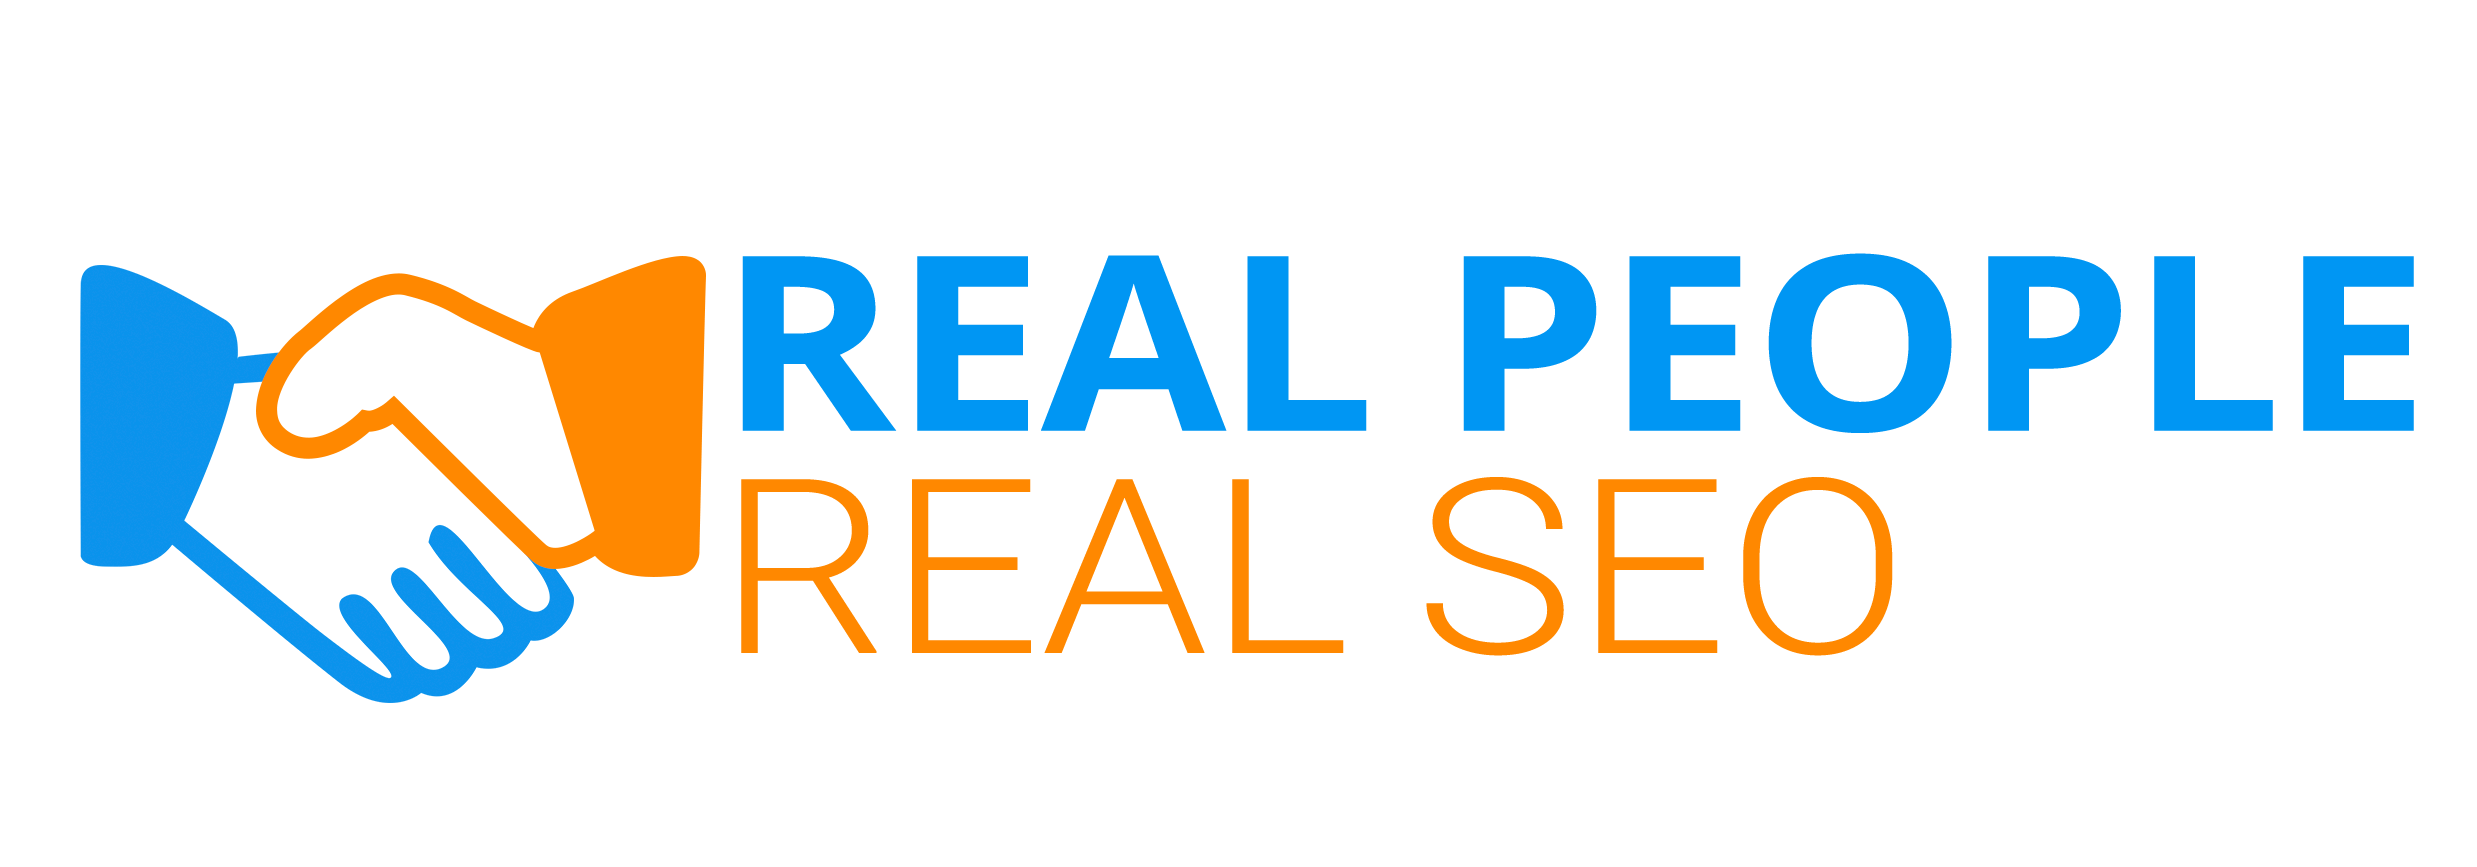 Real People Real SEO logo